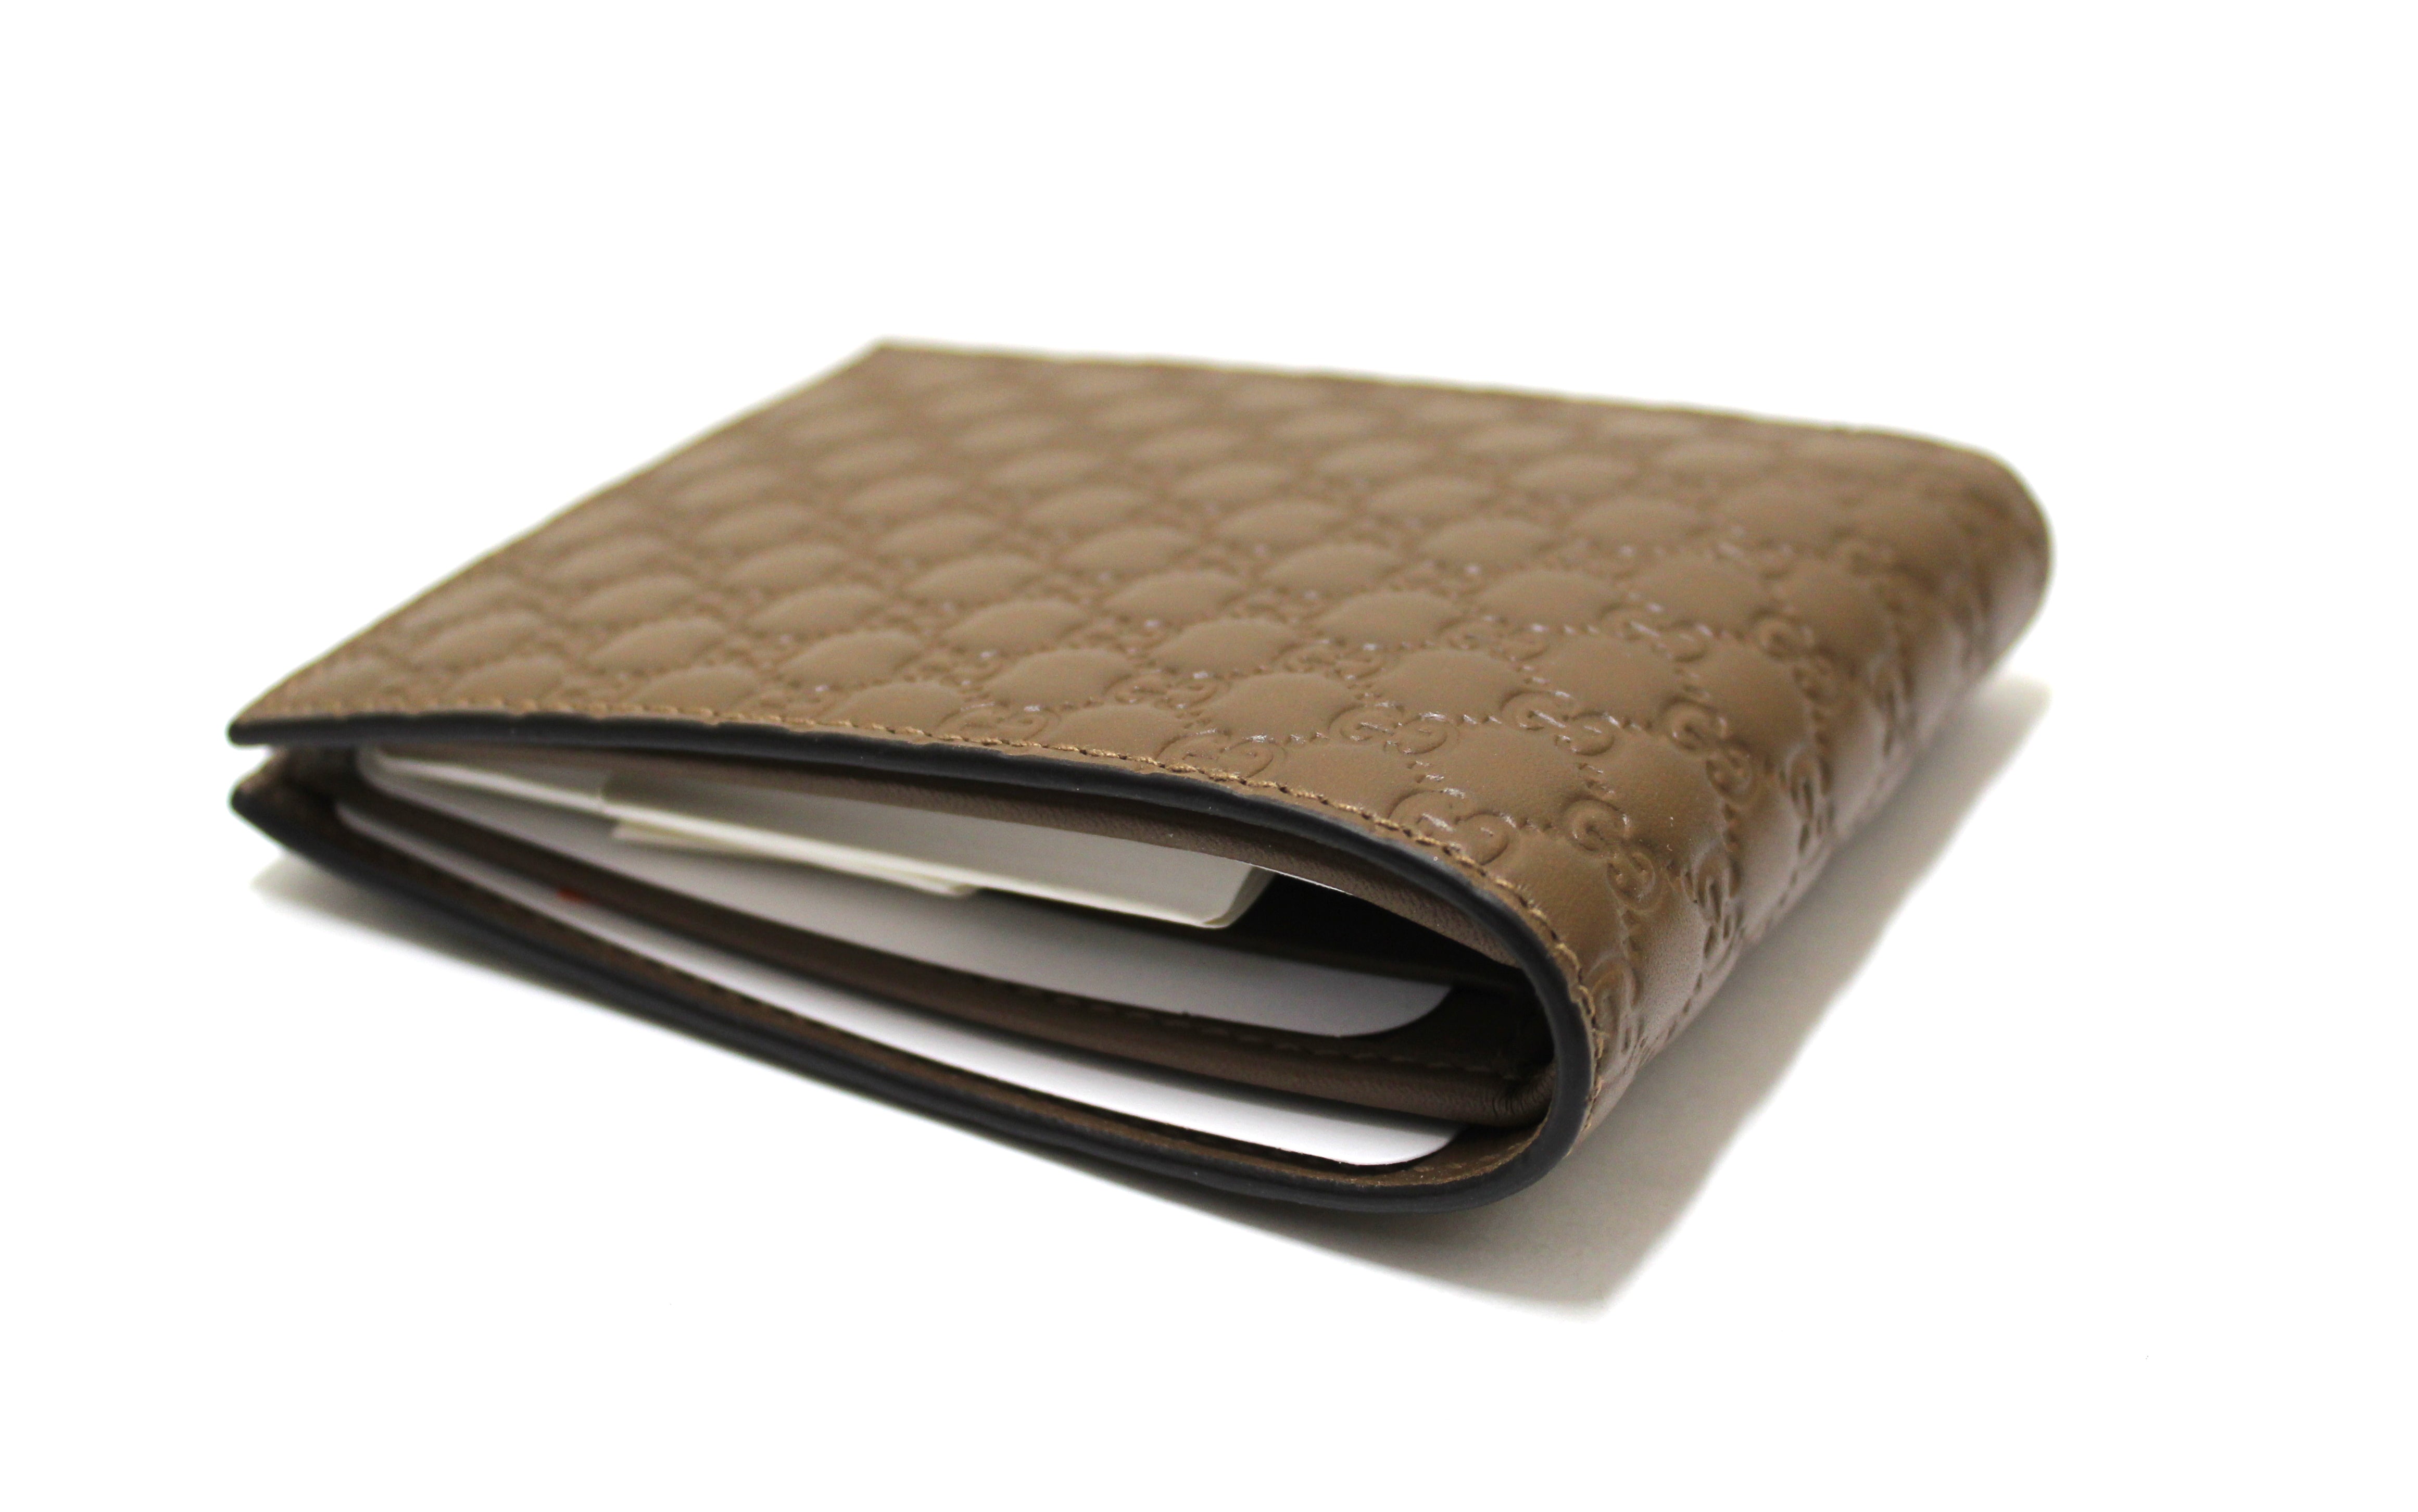 Gucci Men's Folding Wallet